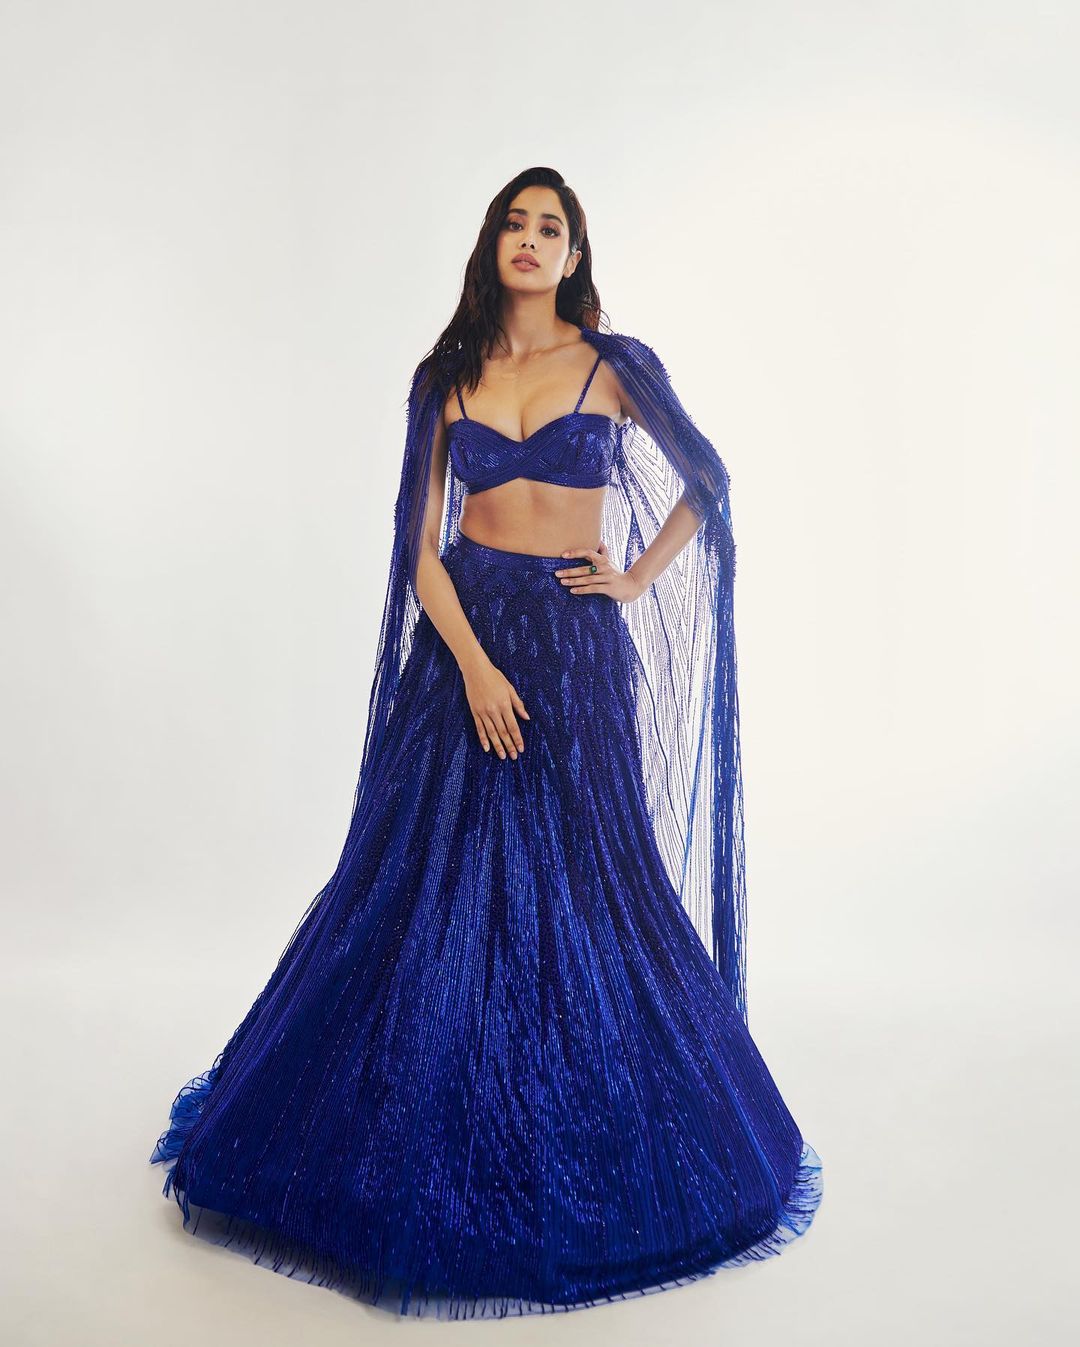 janhvi-kapoor-stunning-looks-in-blue-colour-lehenga-set